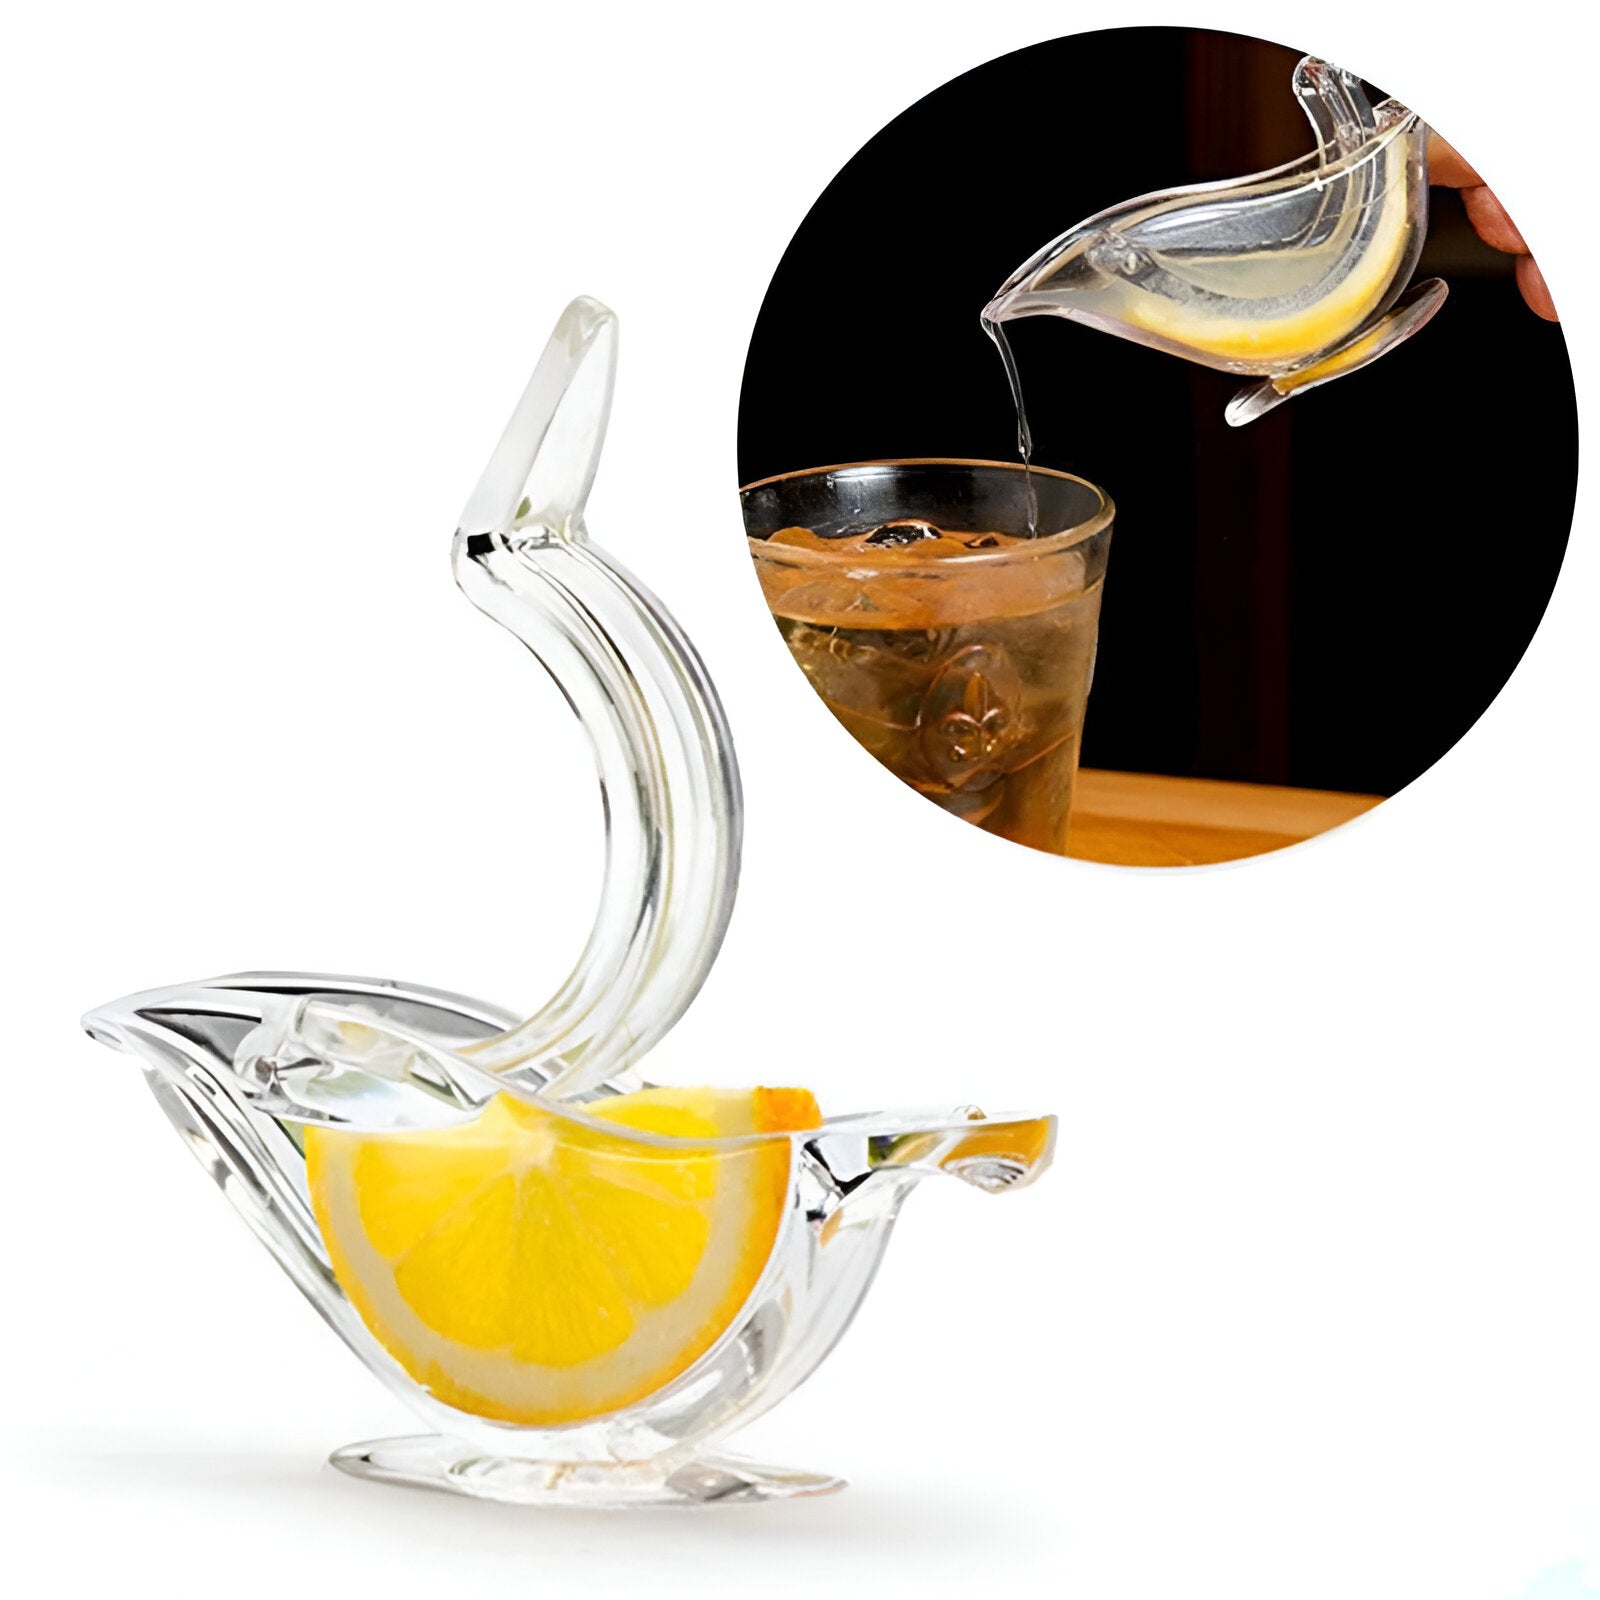 Bird-shaped fruit juicer